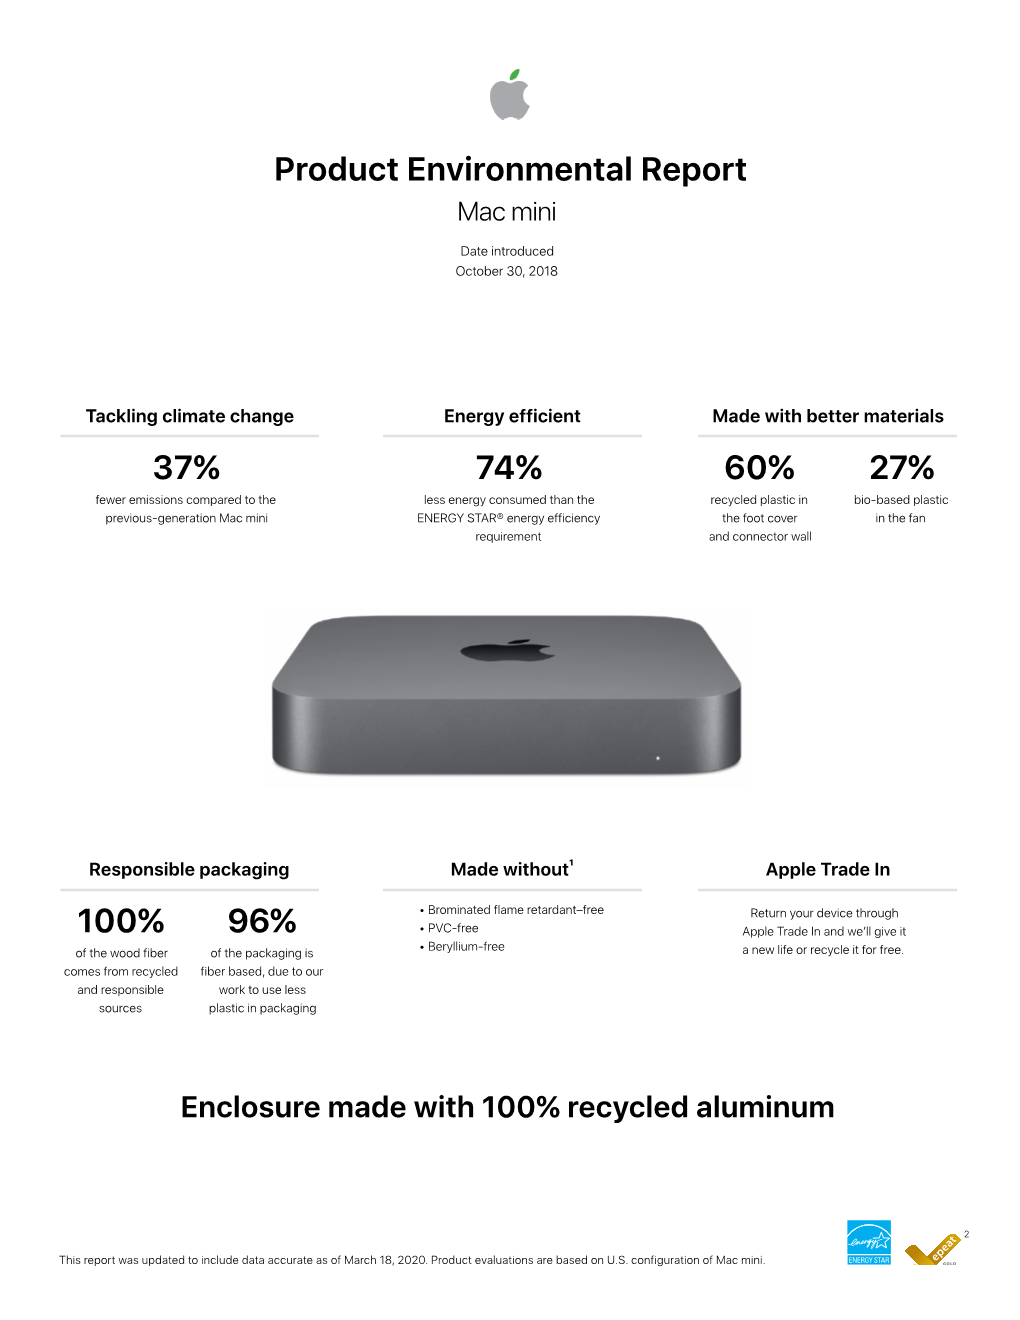 Mac Mini Product Environmental Report March 18, 2020